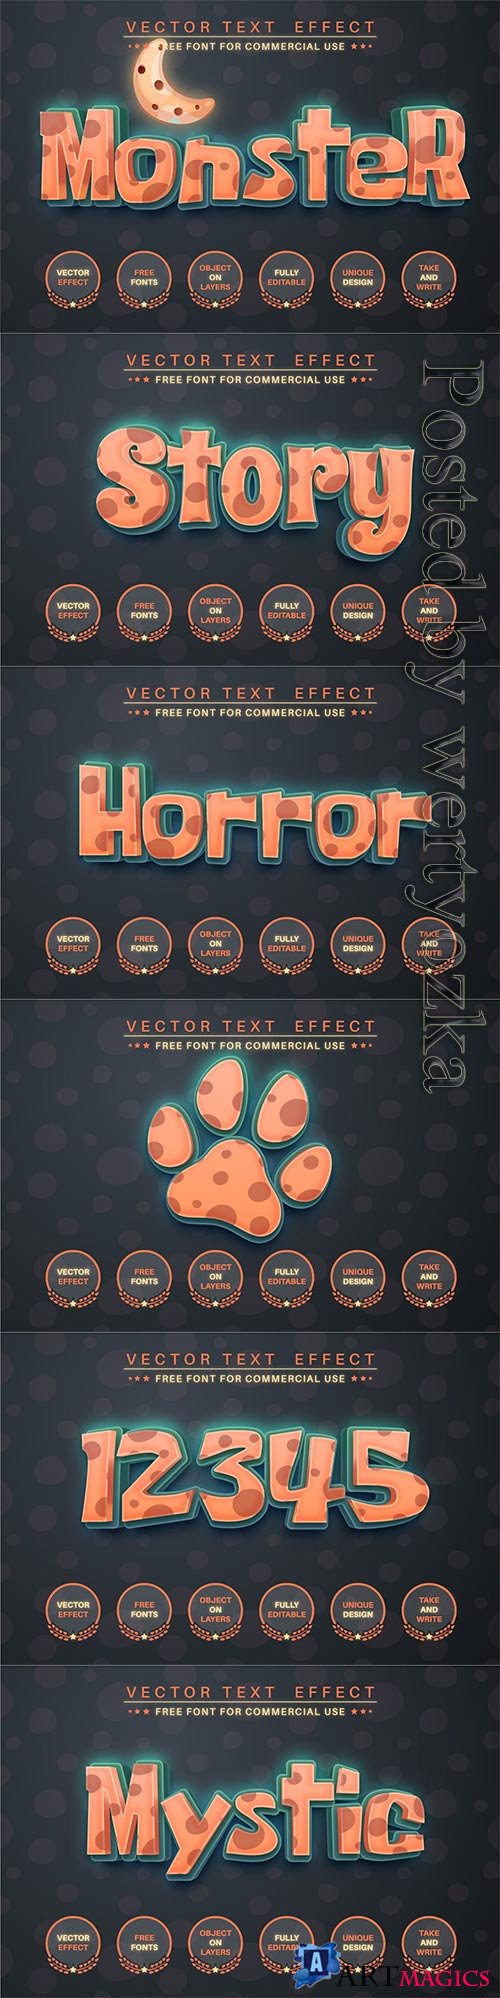 Halloween Monster - edit text effect, font style